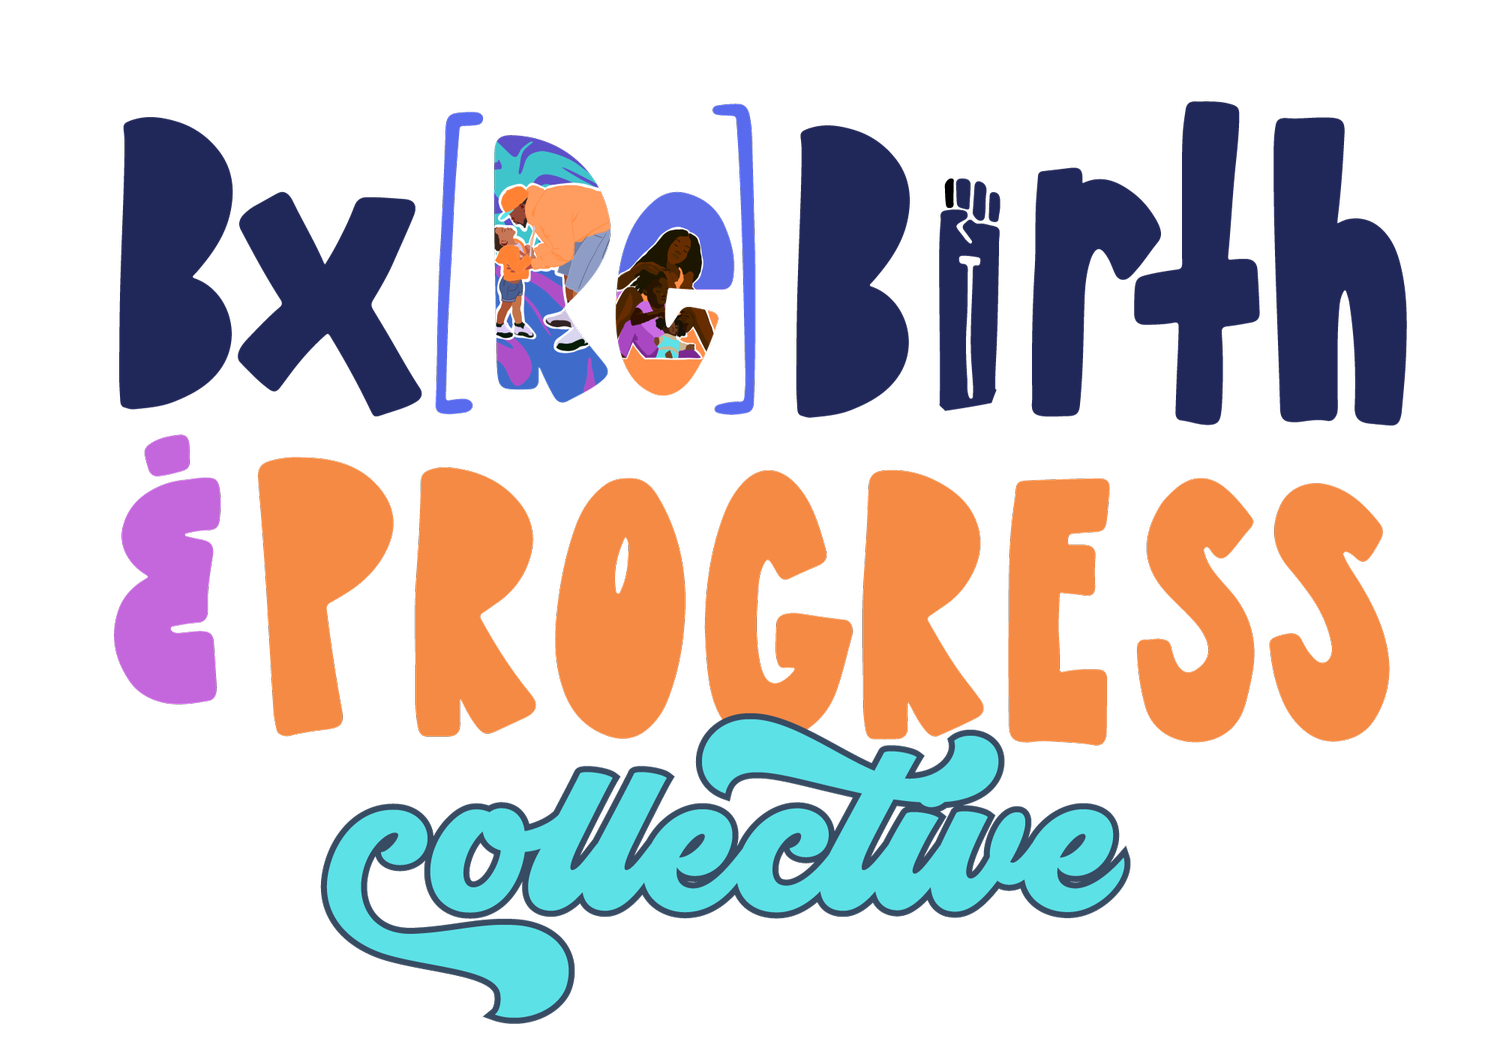 Bx Rebirth Collective